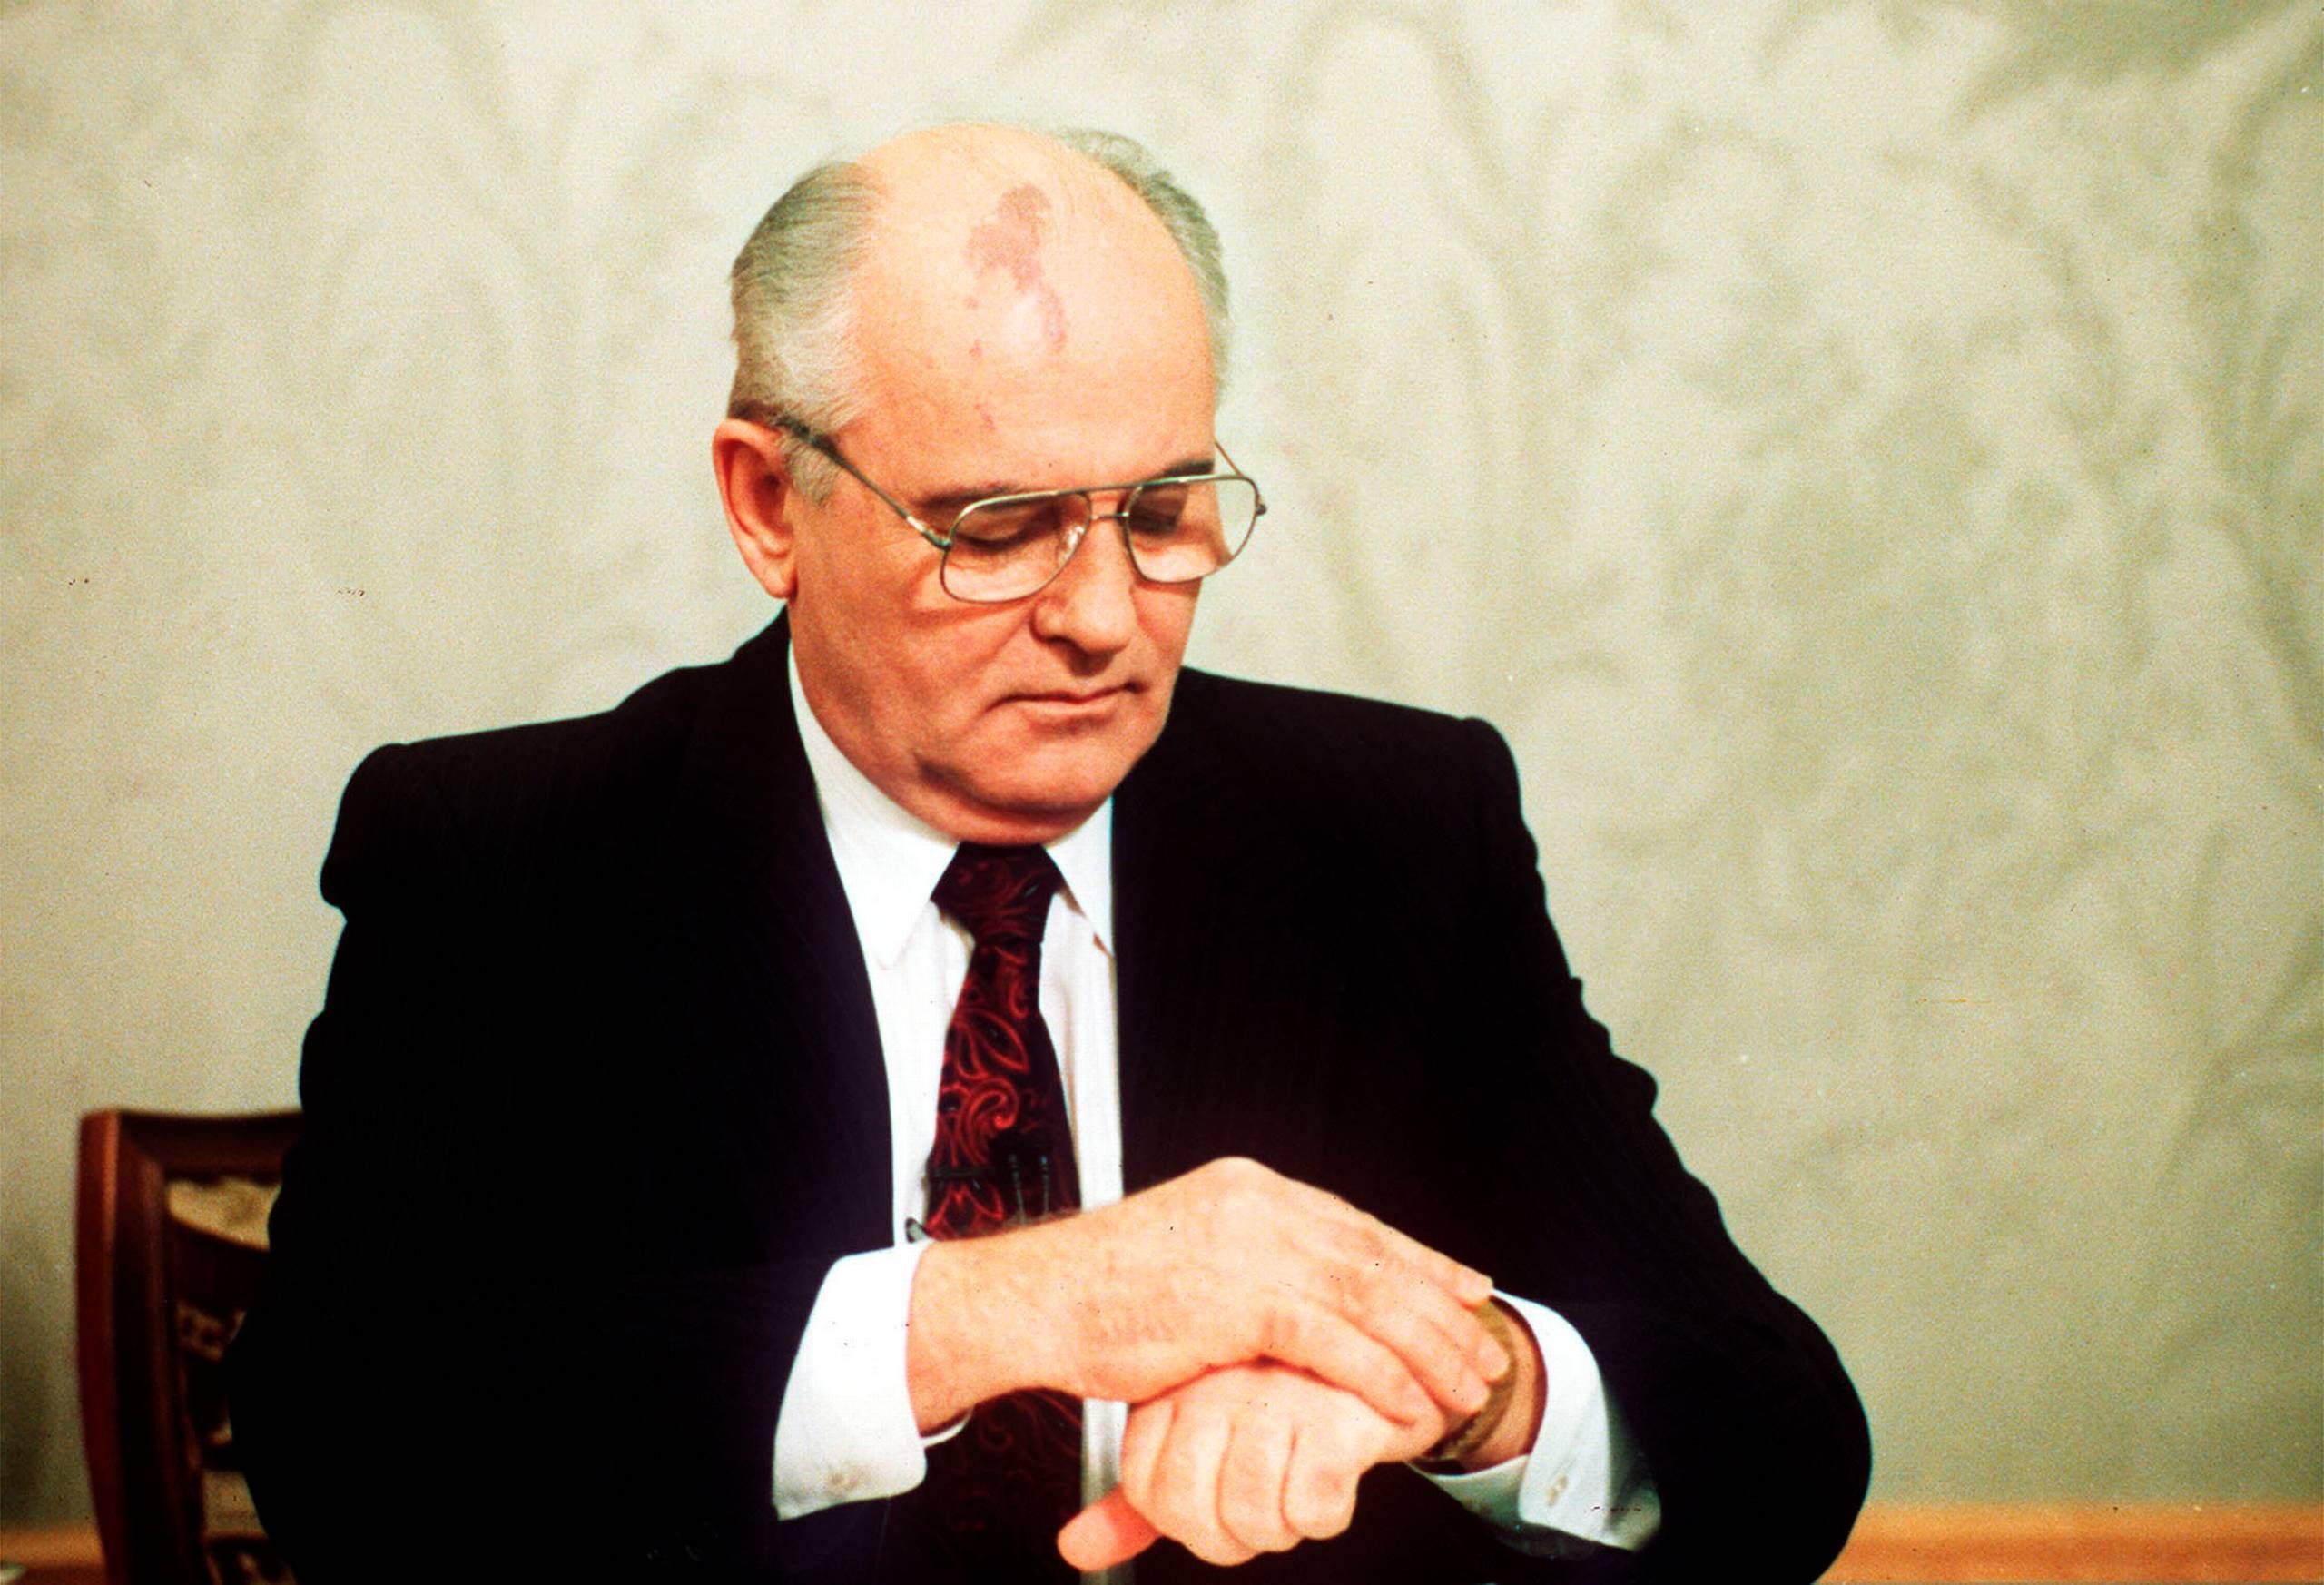 Sovjetunionens sidste leder Mikhail Gorbatjov død